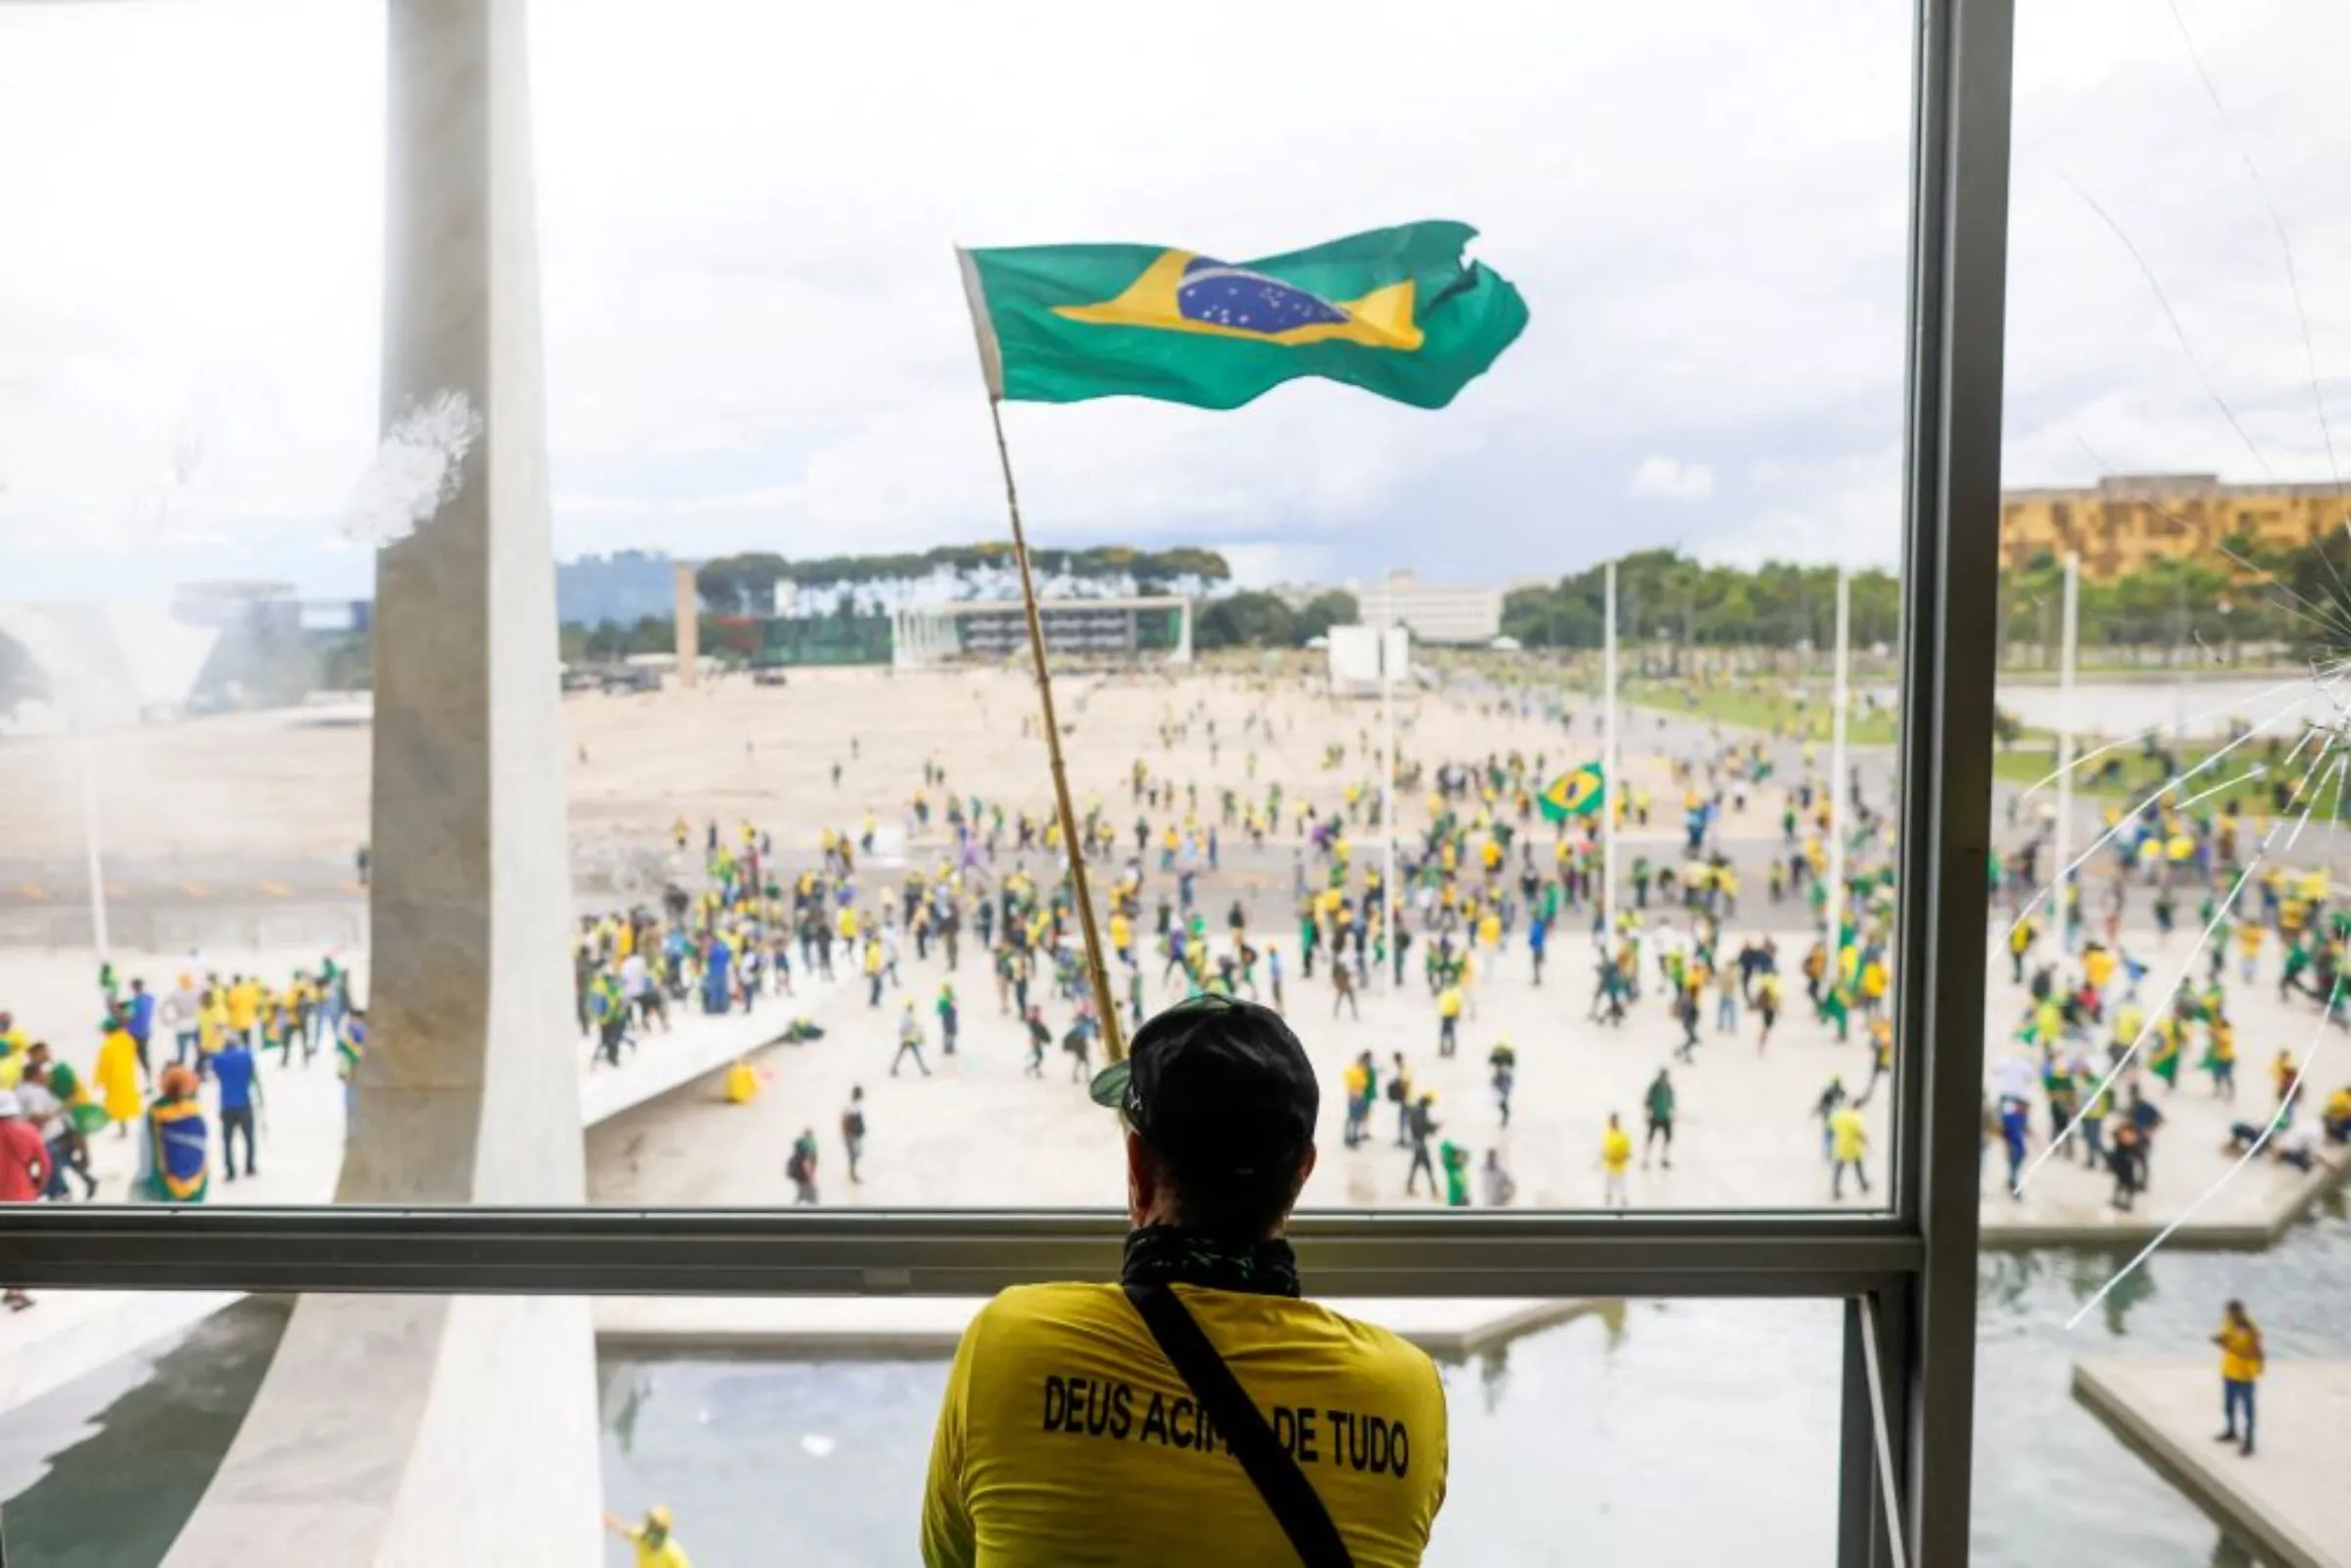 A man waves Brazil's flag as supporters of Brazil's former President Jair Bolsonaro demonstrate against President Luiz Inacio Lula da Silva, outside Brazil's National Congress in Brasilia, Brazil, January 8, 2023